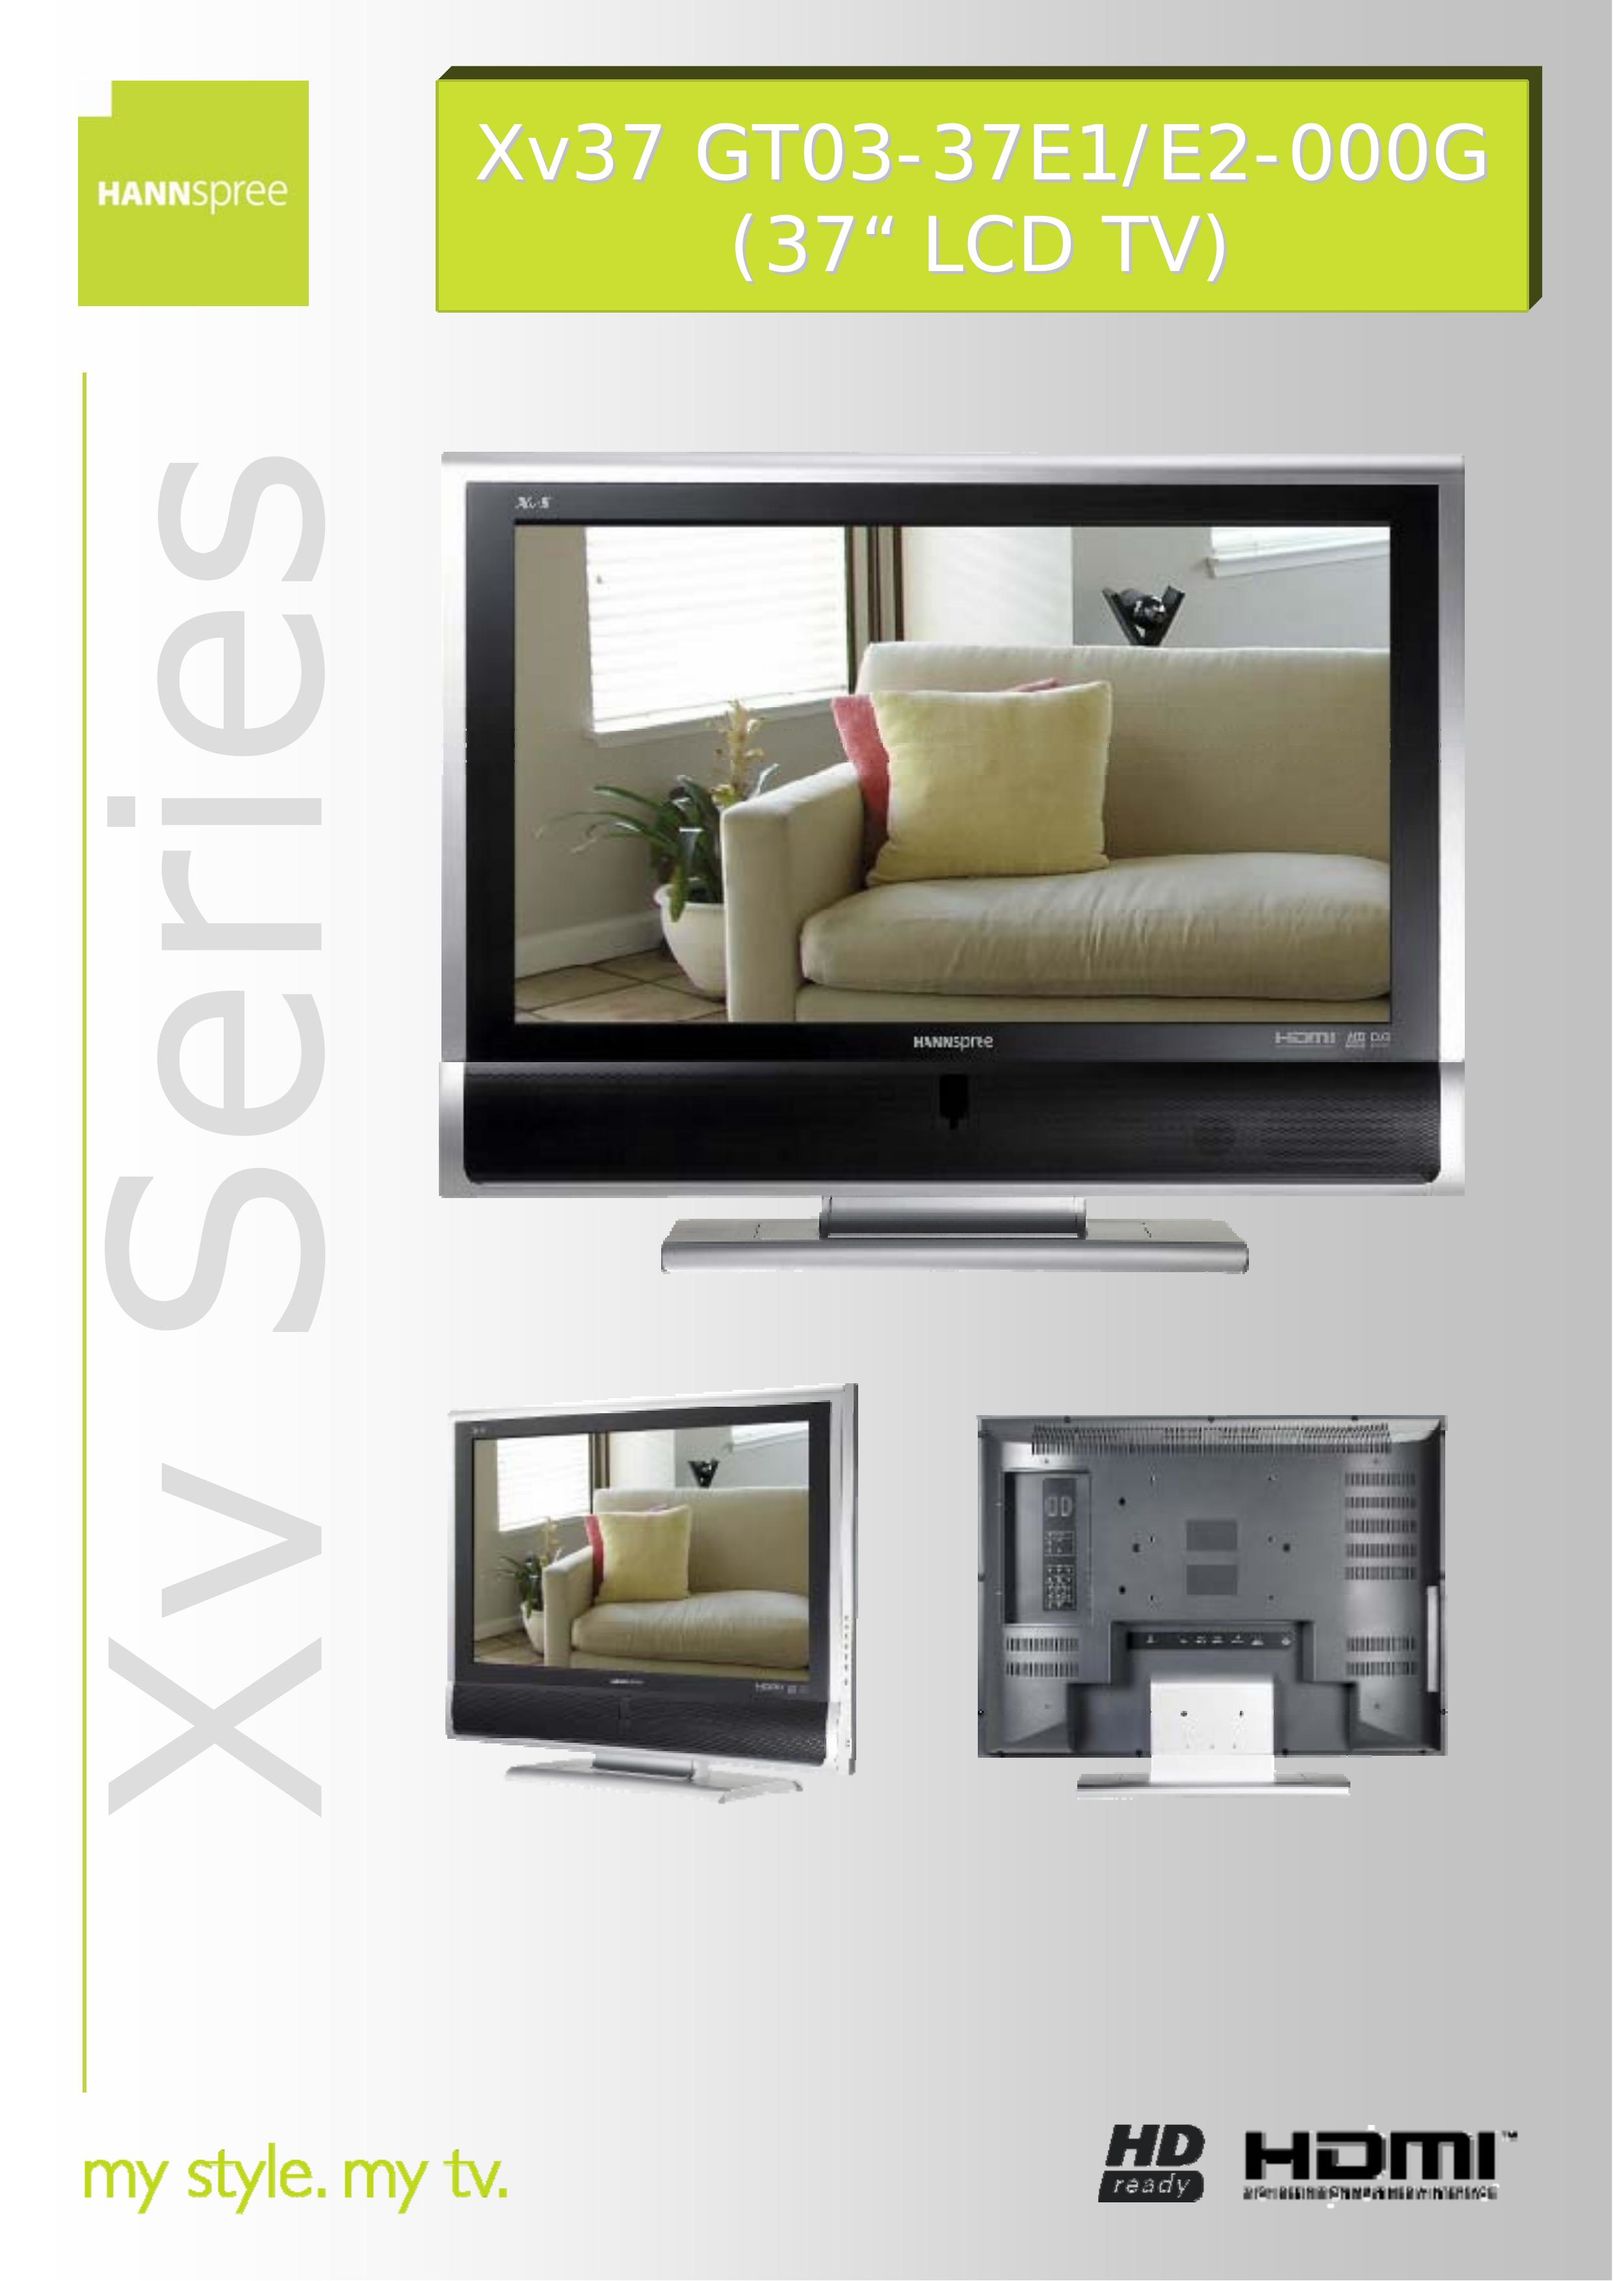 HANNspree GT03Xv37 Flat Panel Television User Manual